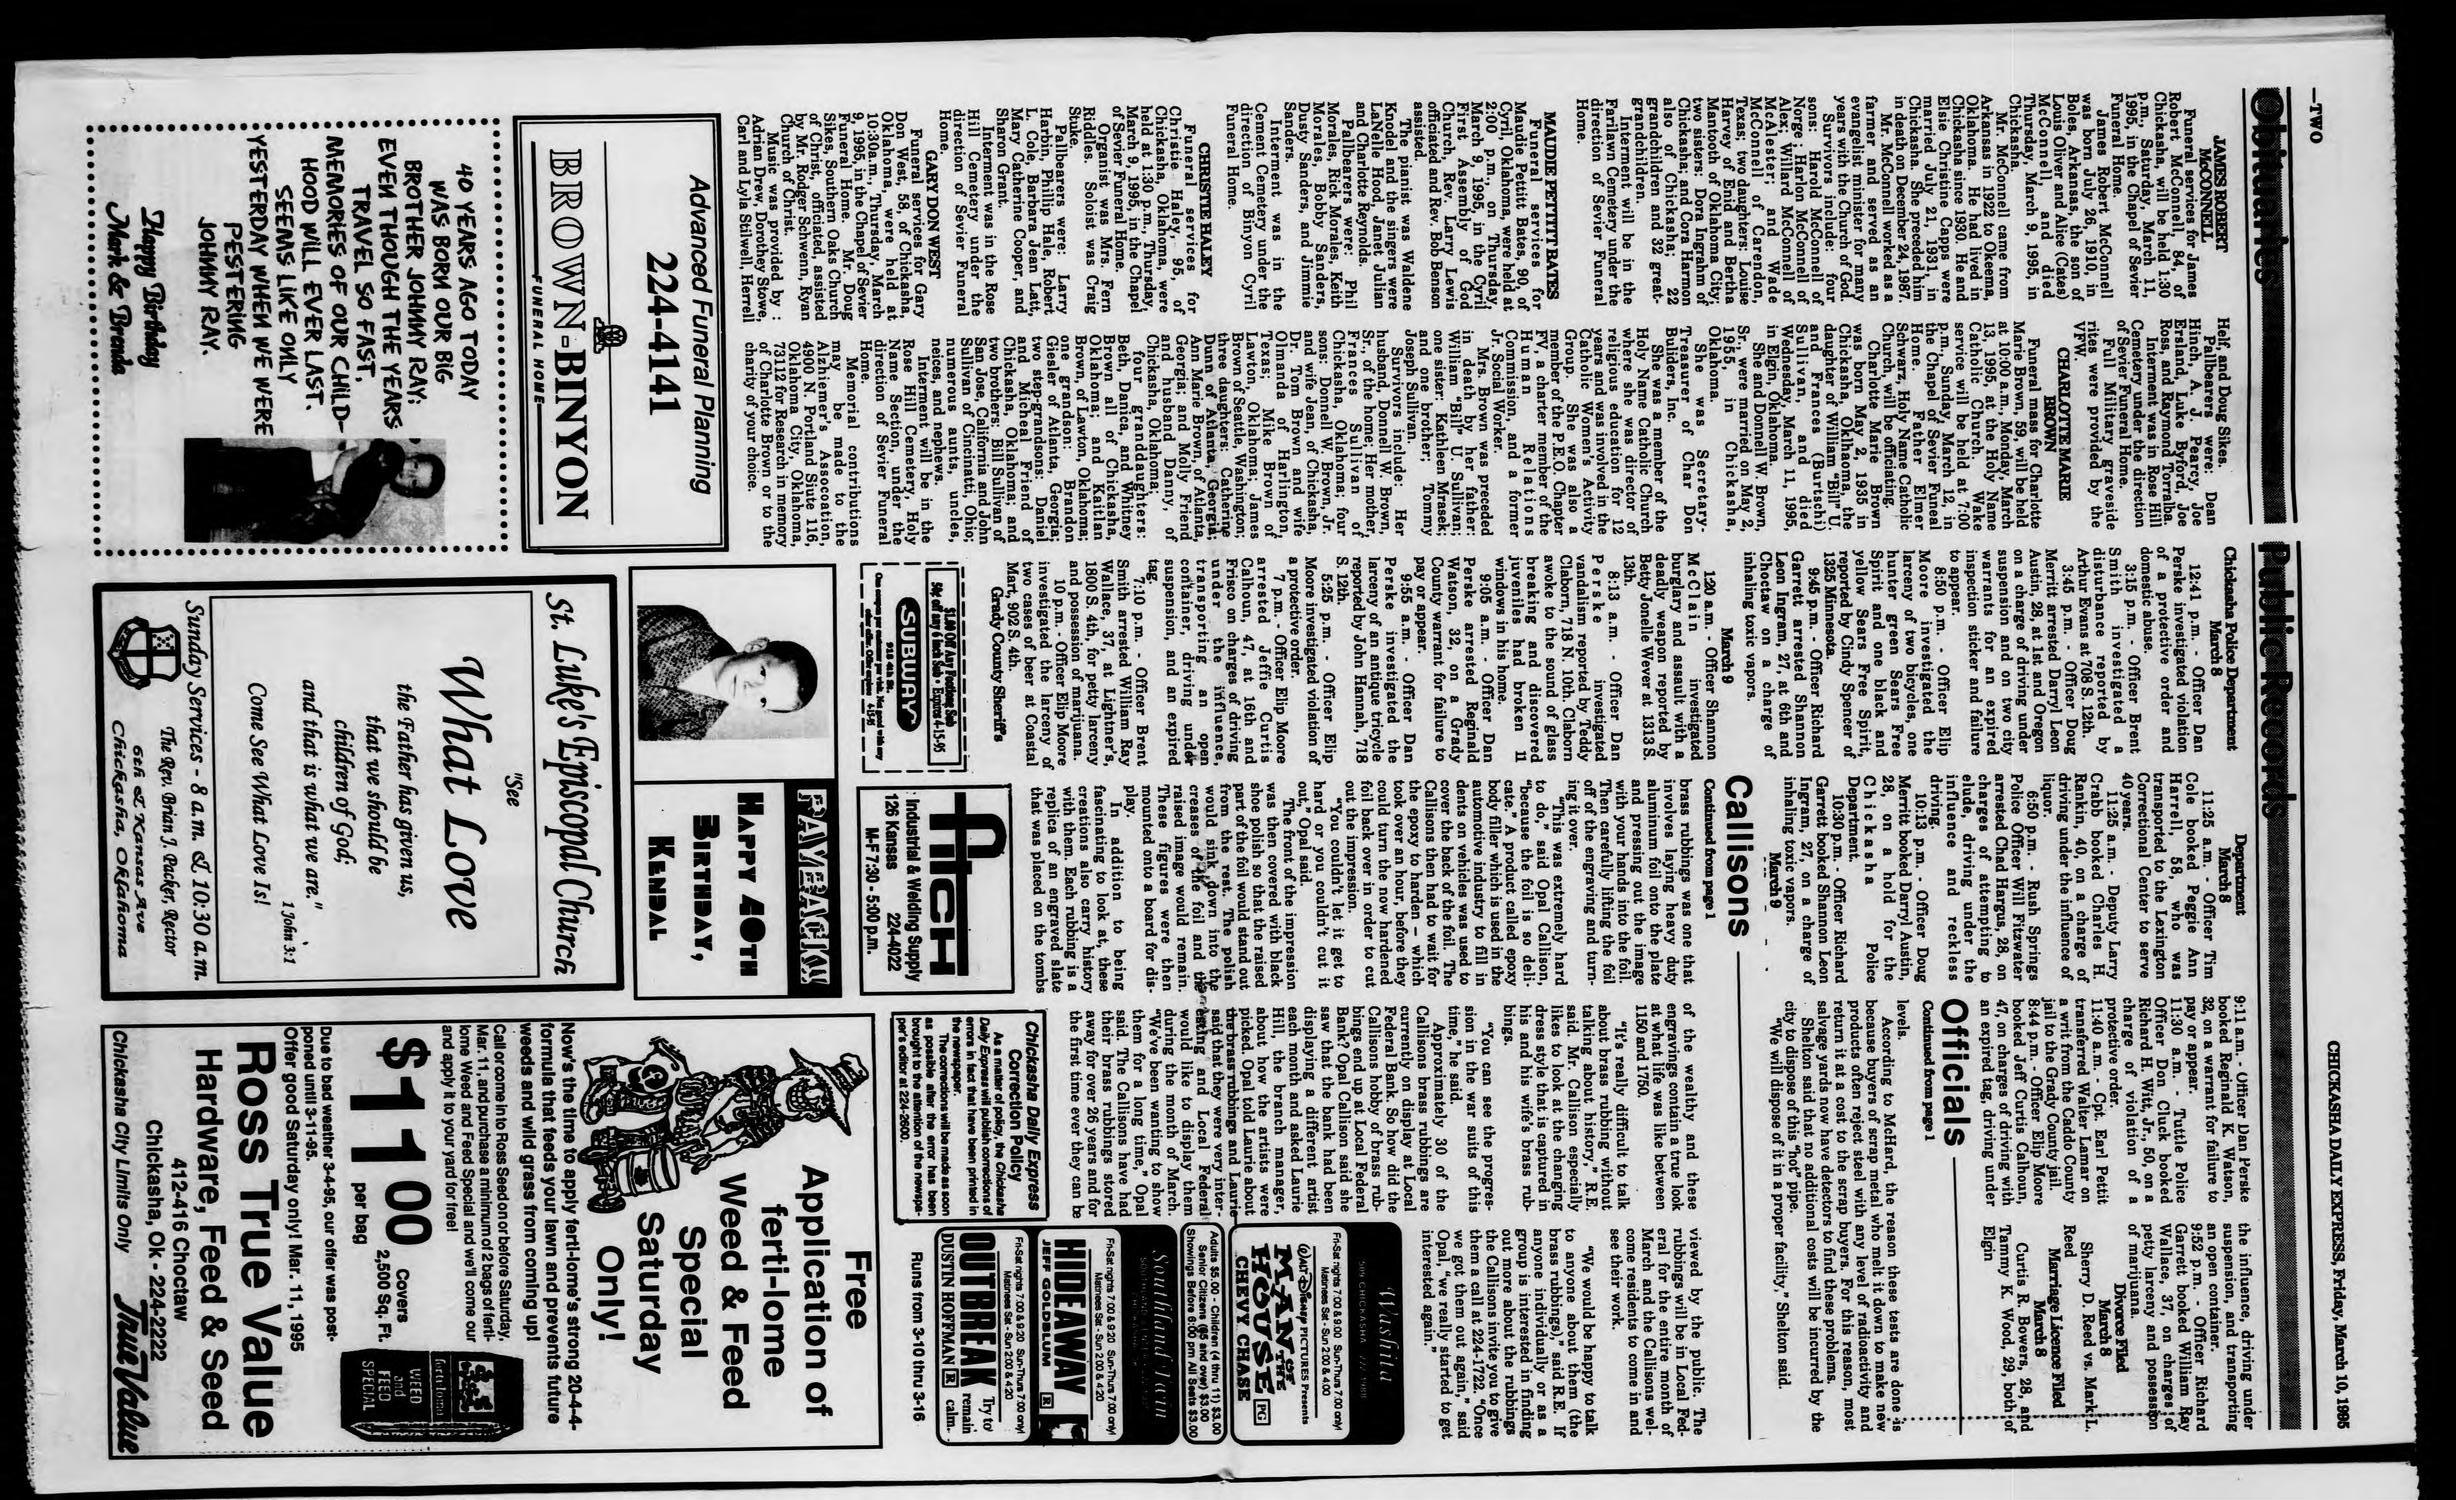 Chickasha Daily Express (Chickasha, Okla.), Vol. 104, No. 308, Ed. 1 Friday, March 10, 1995
                                                
                                                    [Sequence #]: 2 of 10
                                                